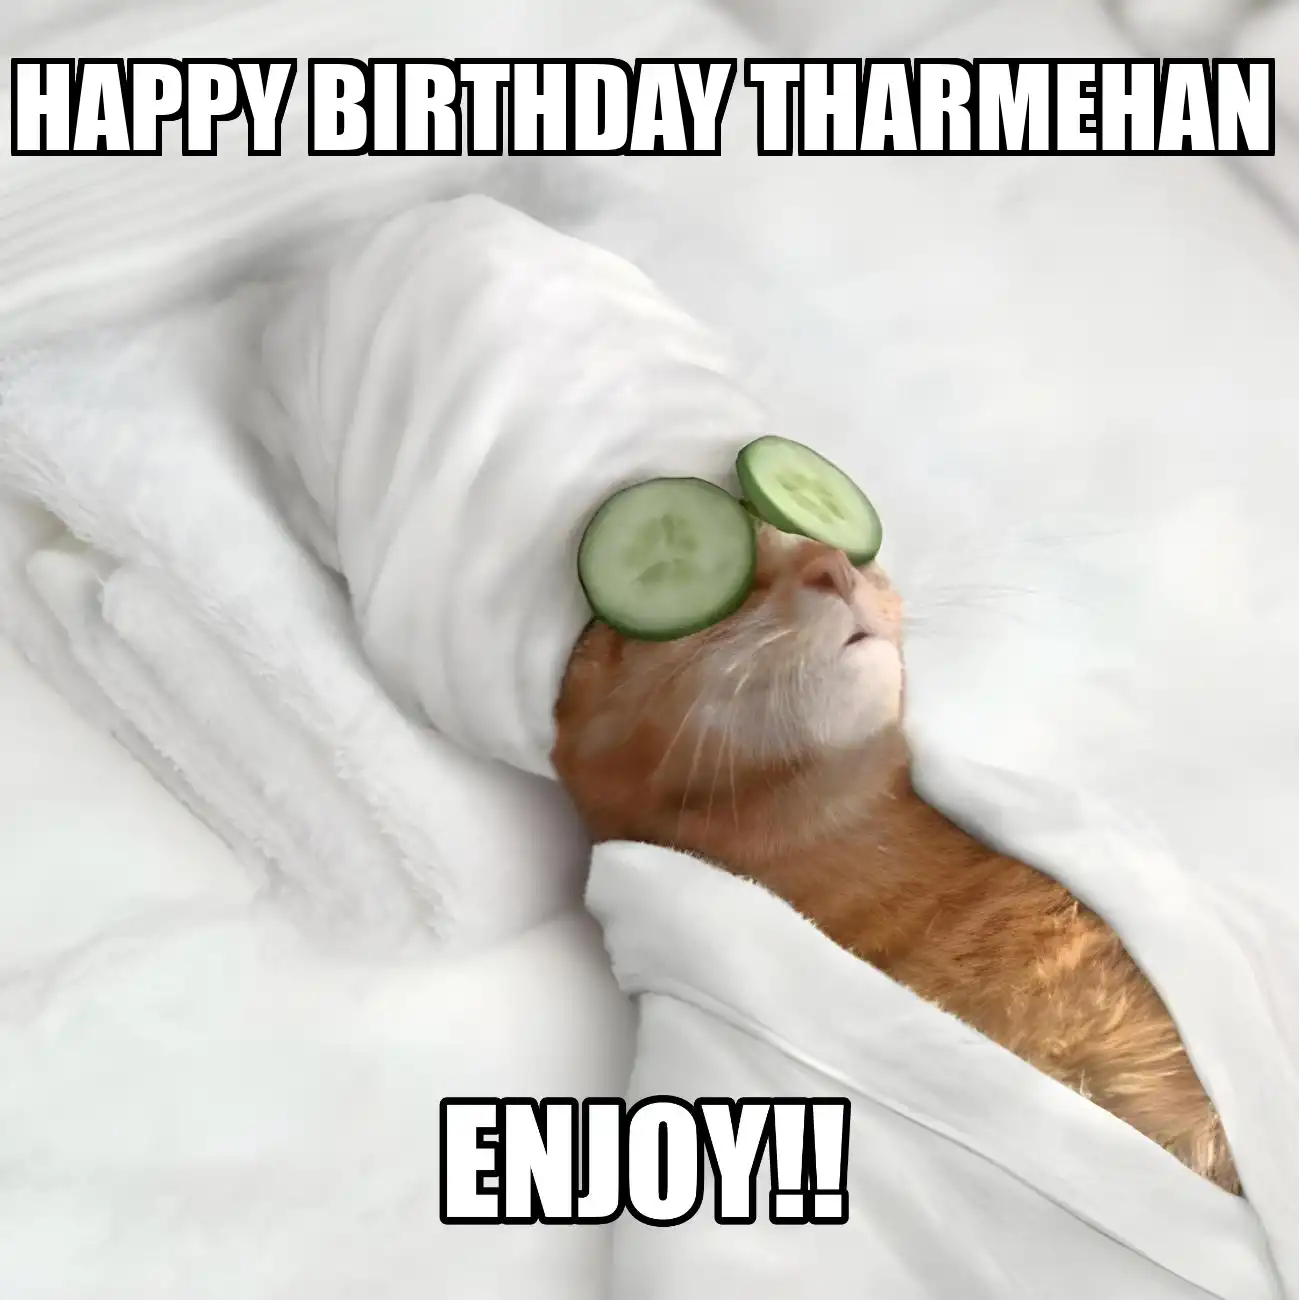 Happy Birthday Tharmehan Enjoy Cat Meme